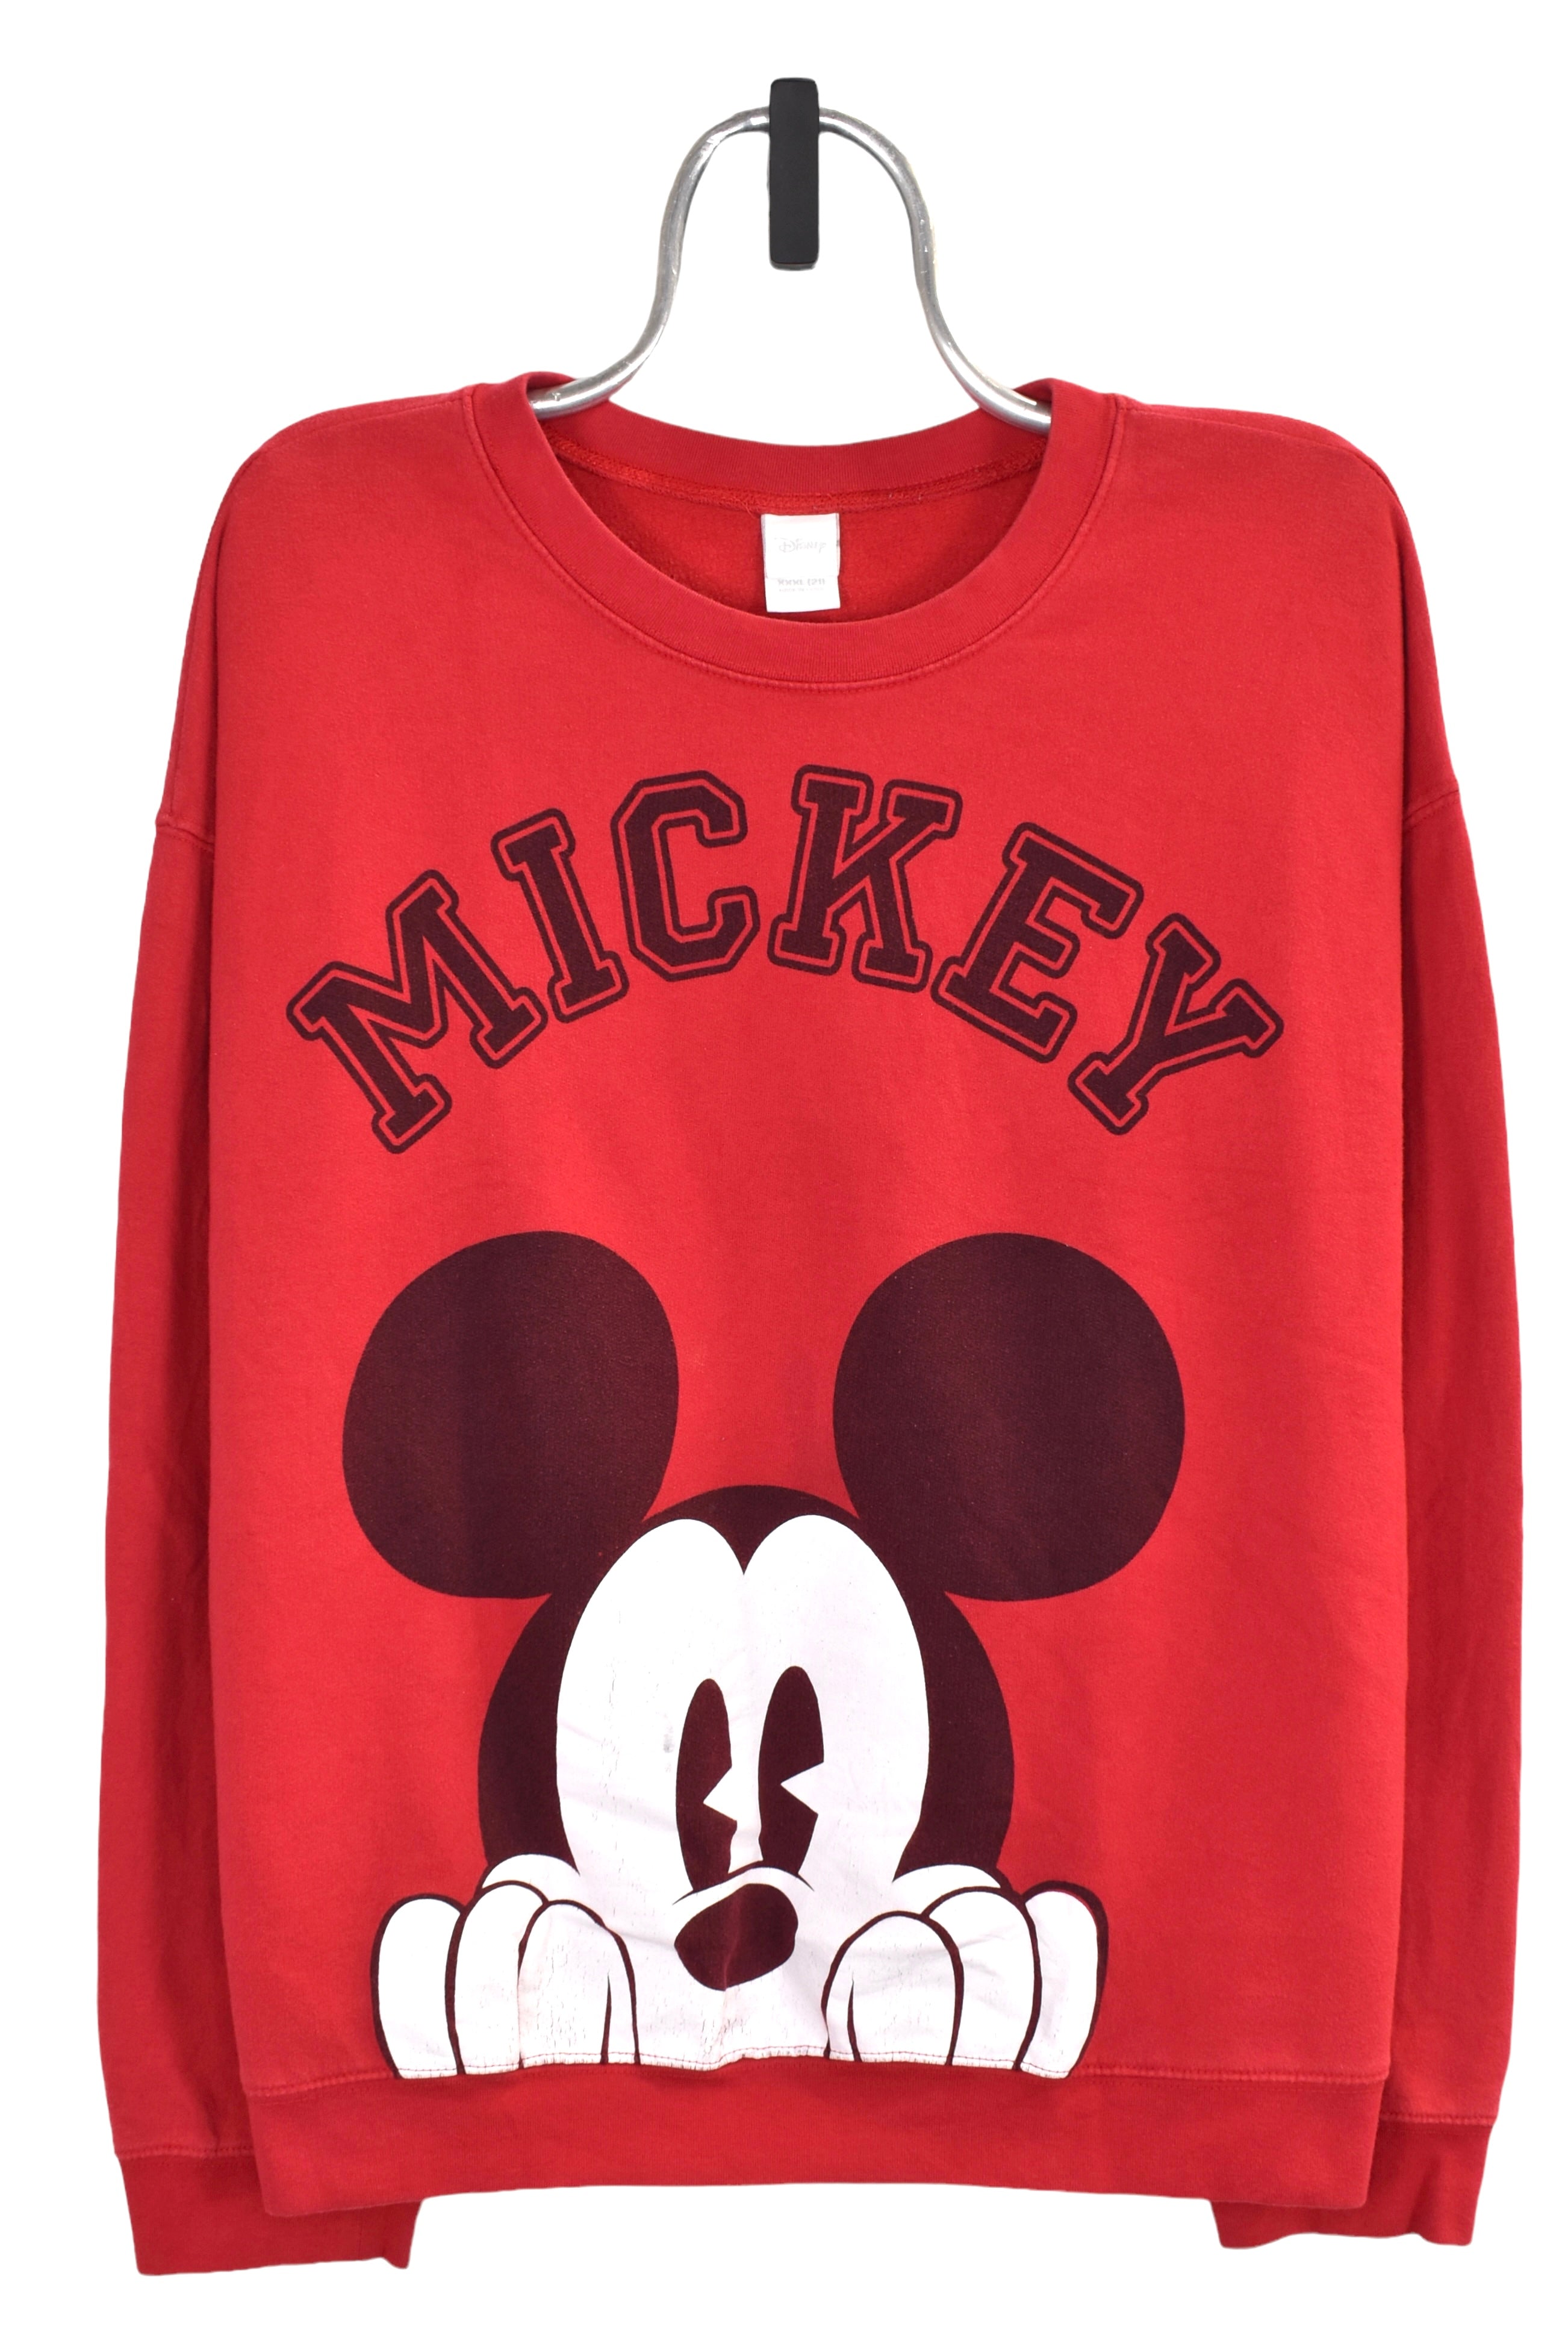 Vintage Mickey Mouse sweatshirt (XL), red Disney graphic crewneck